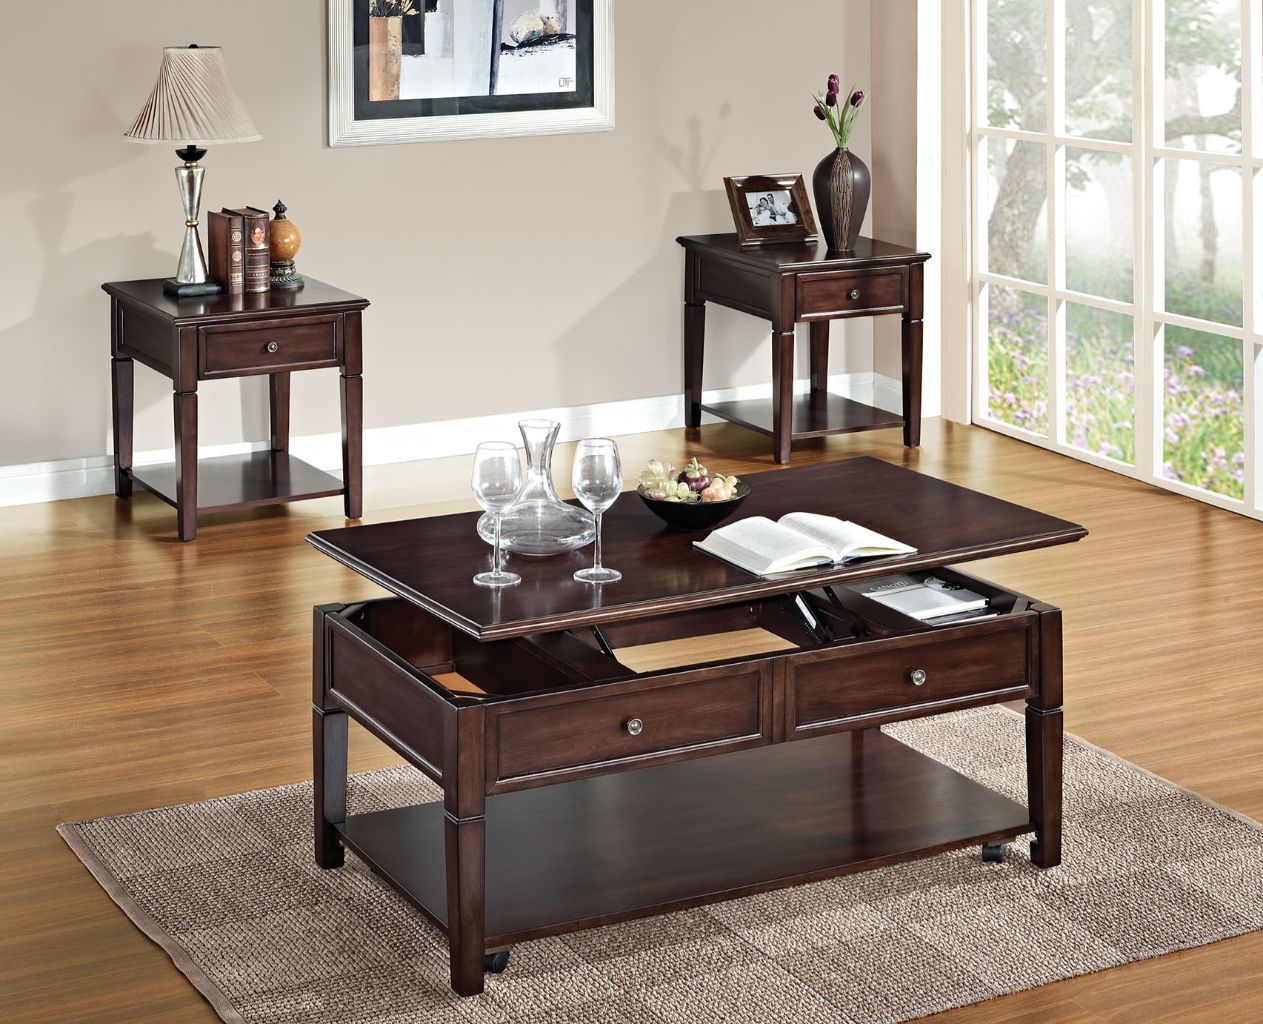 ACME Furniture Coffee Tables - Malachi Coffee Table w/Lift Top, Walnut (80254)